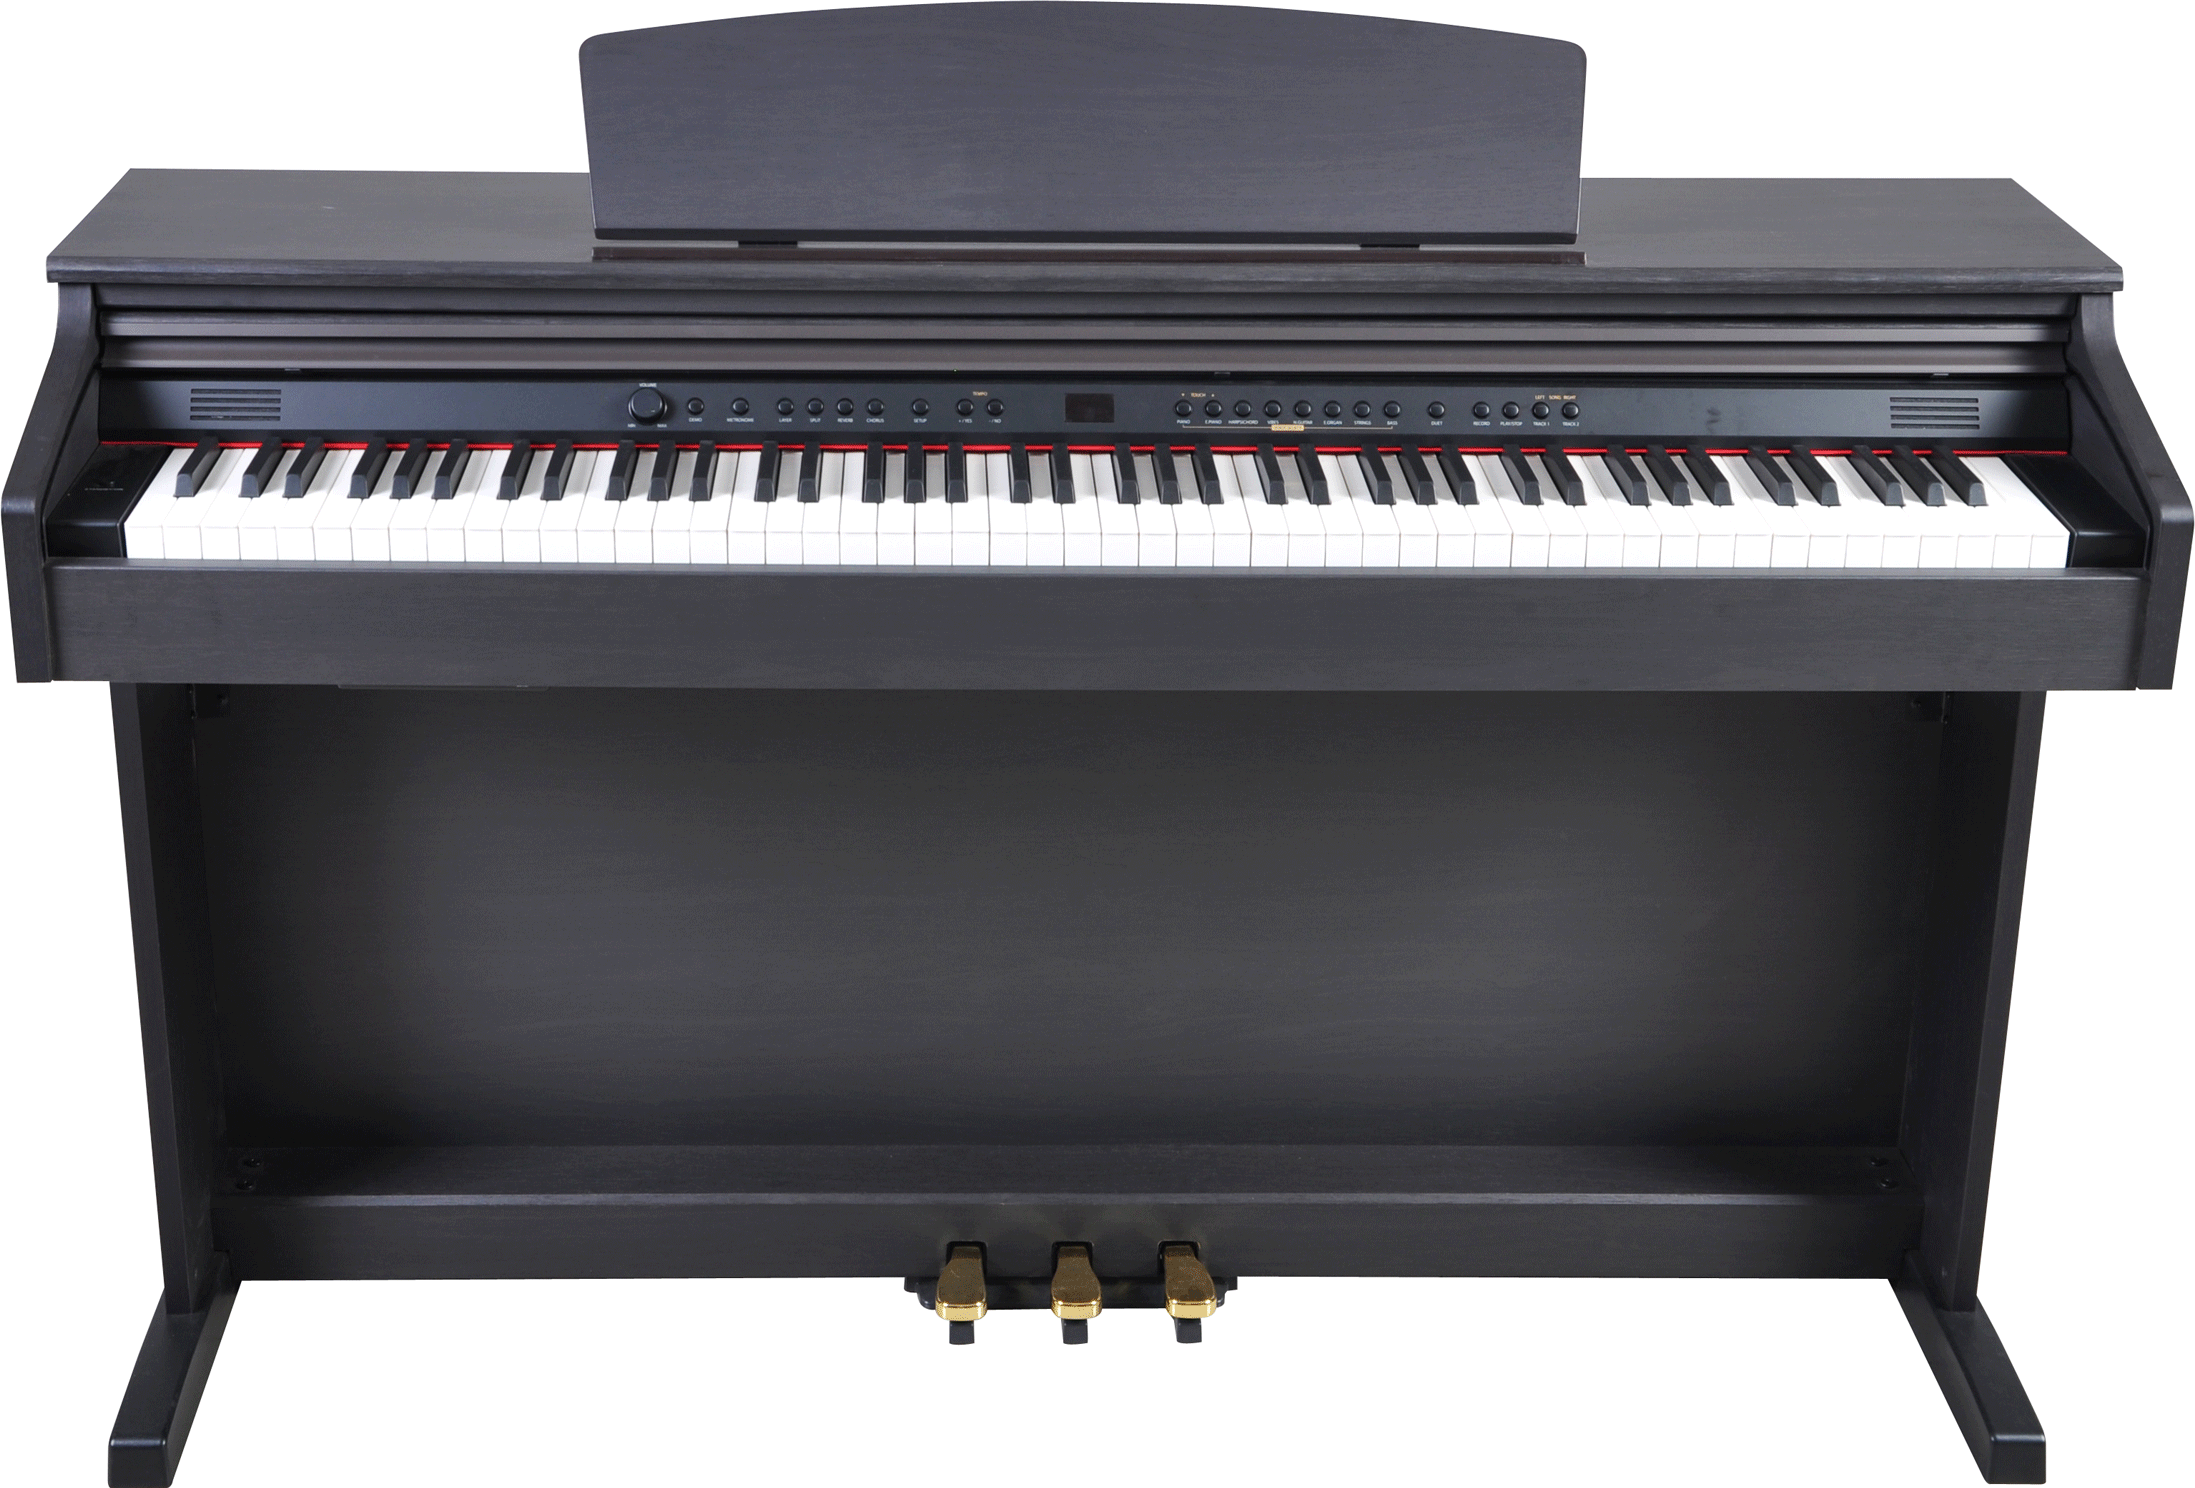 Artesia DP-3 Rosewood Satin Цифровое фортепиано. Клавиатура: 88 динамич. молот. взвеш. клавиш